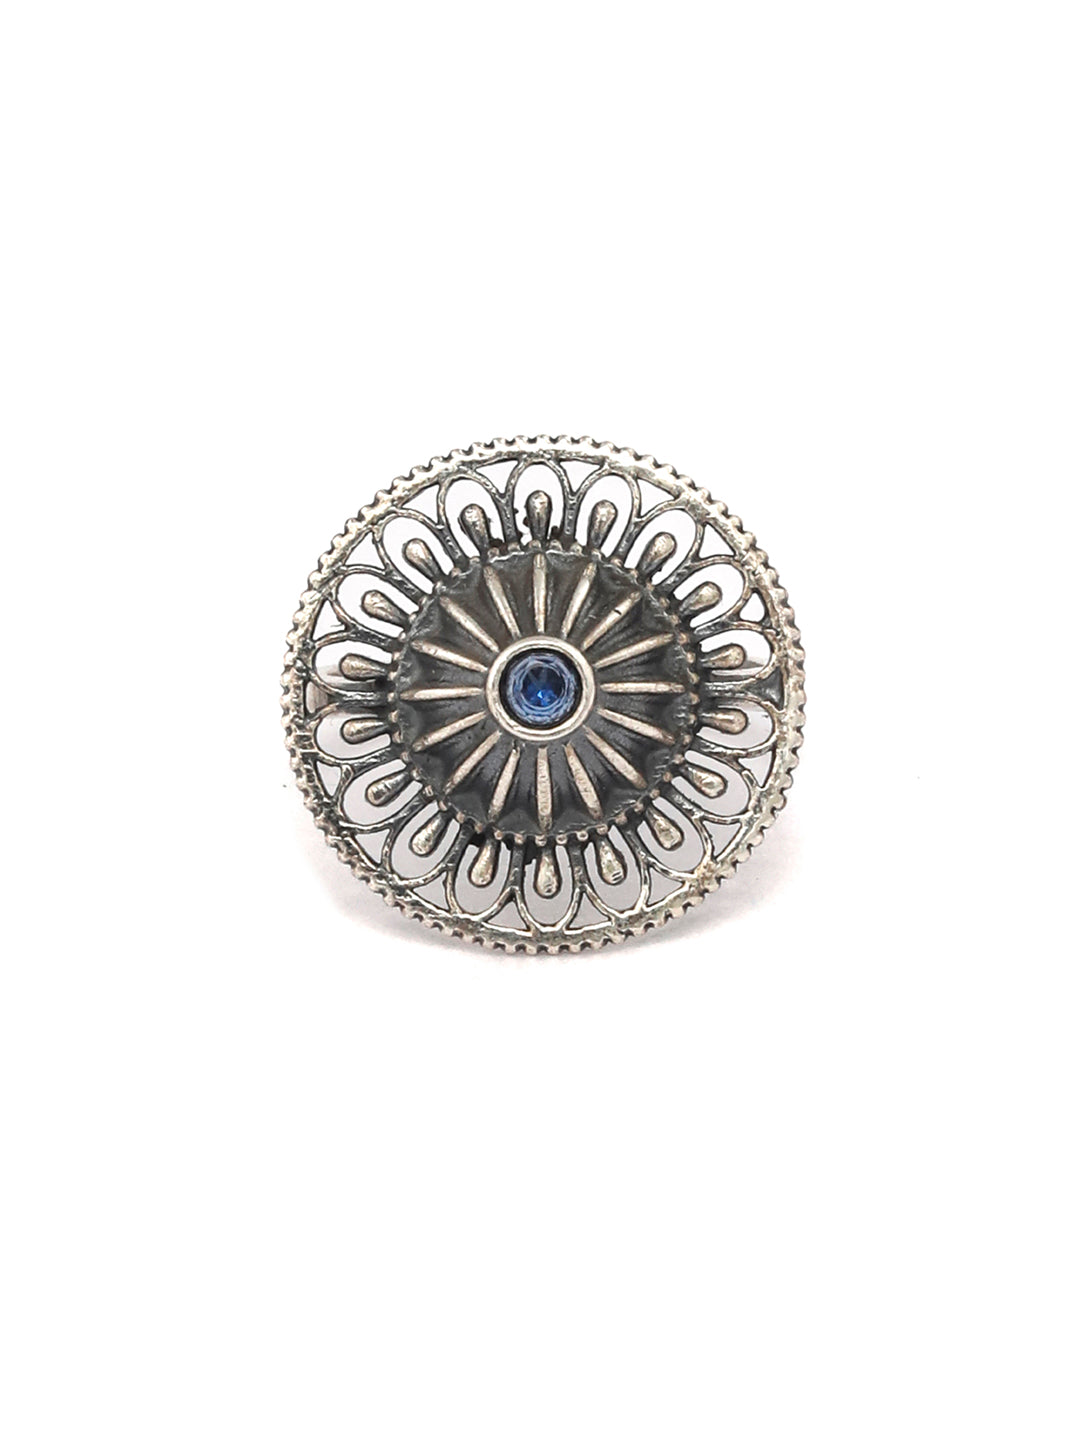 Mandala Oxidised Silver Ring with Blue Stone